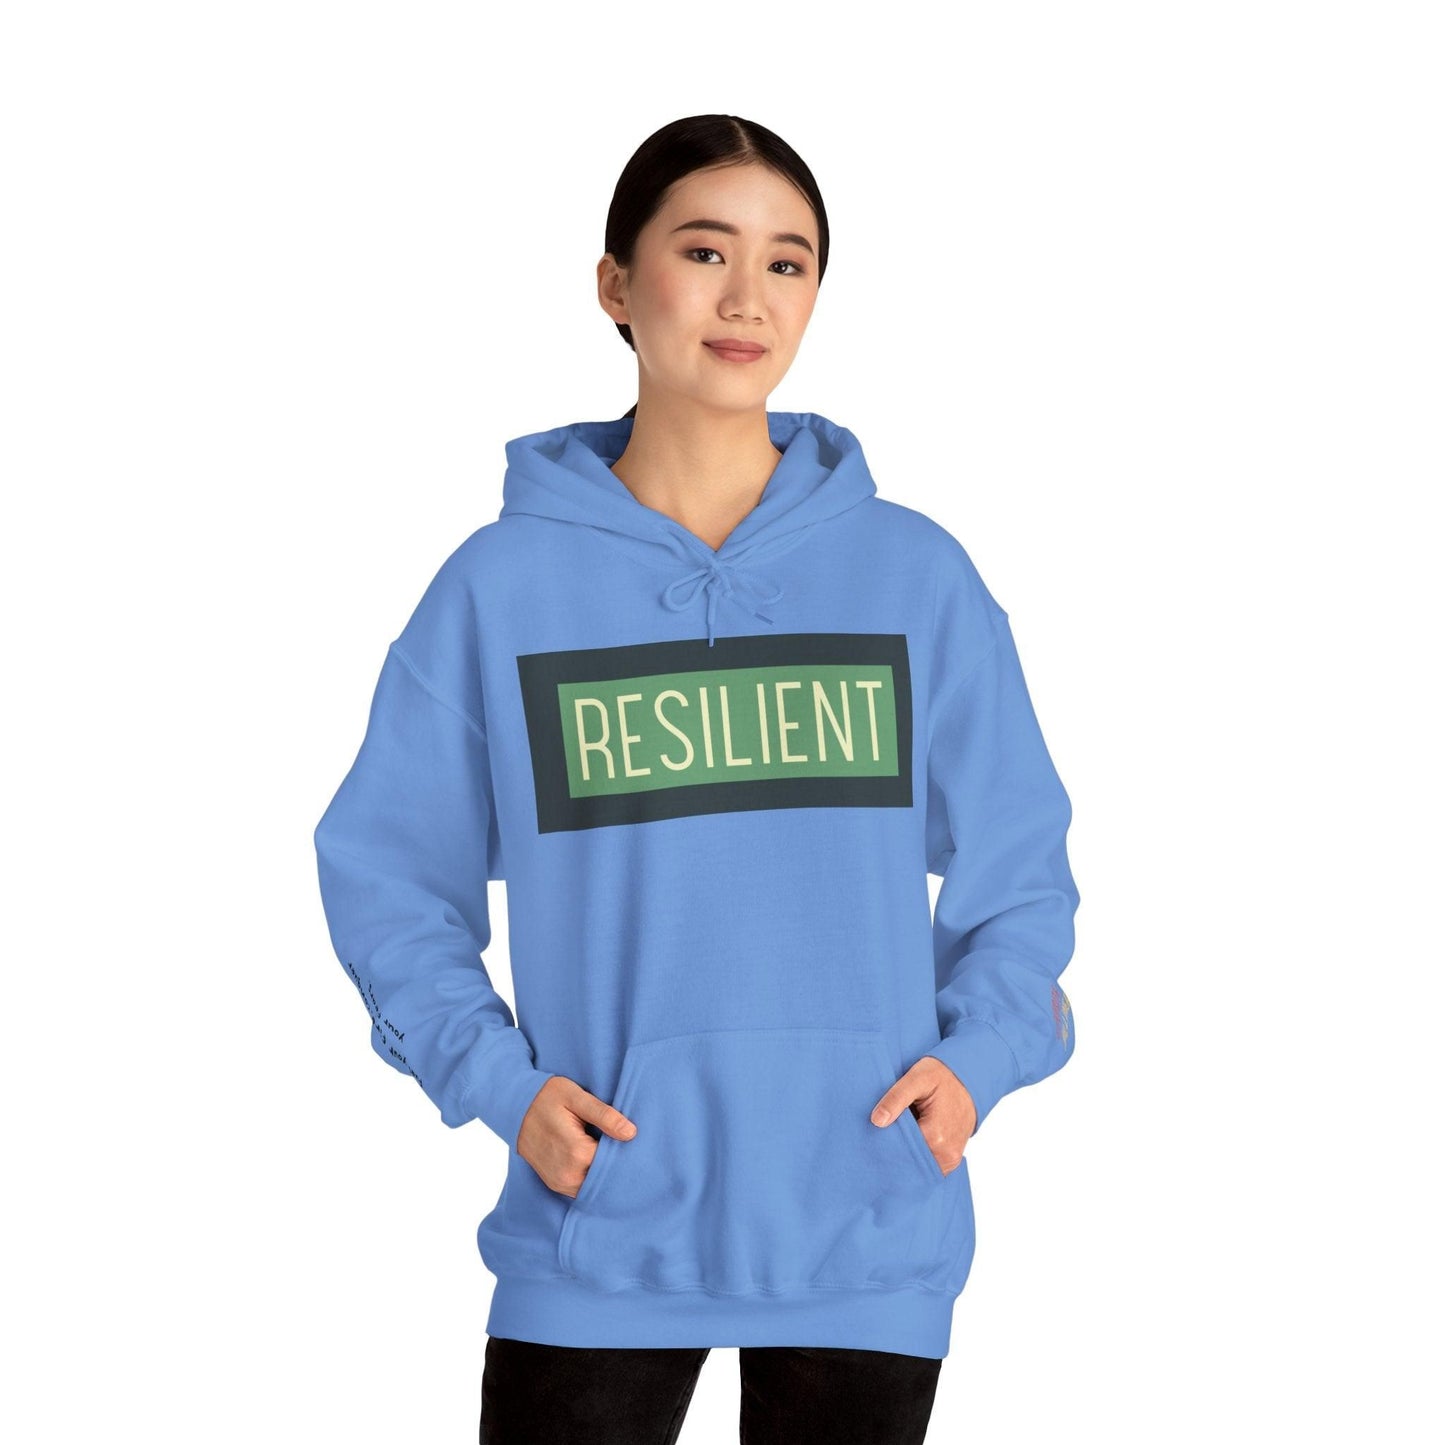 Resilient Unisex Heavy Blend Hooded Sweatshirt Hoodie Carolina Blue S 